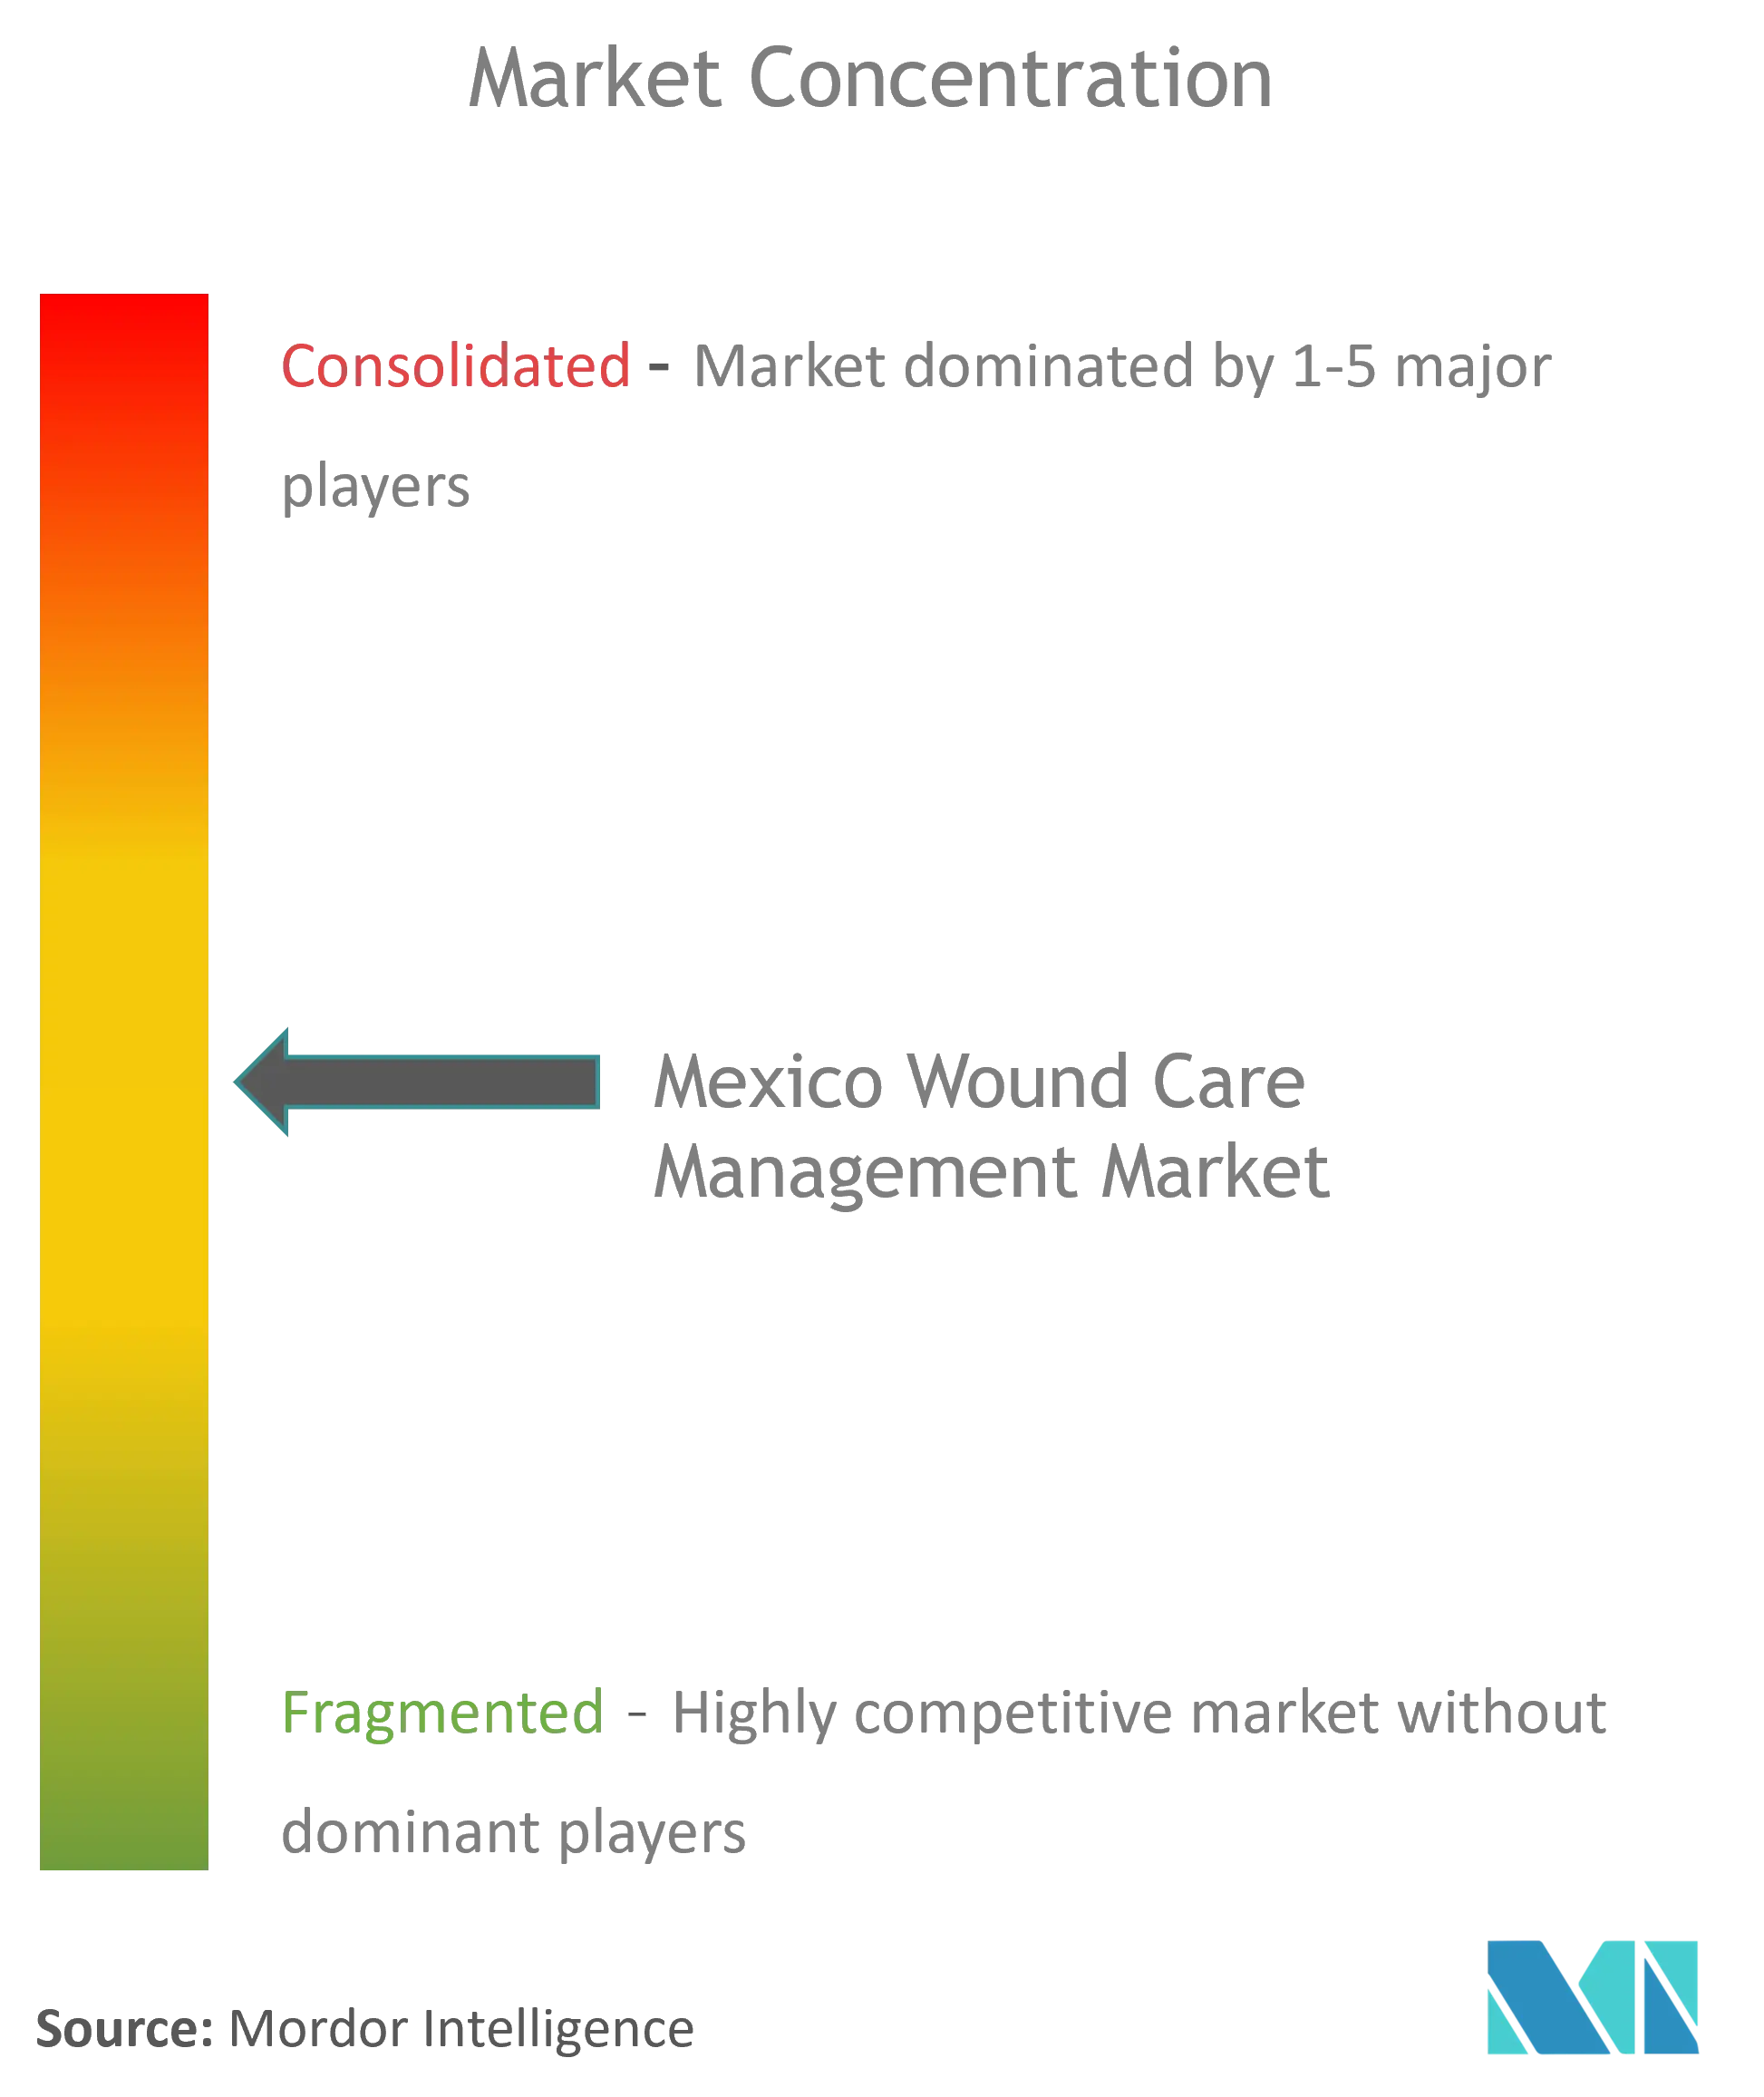 Mexico Wound Care Management Market Concentration